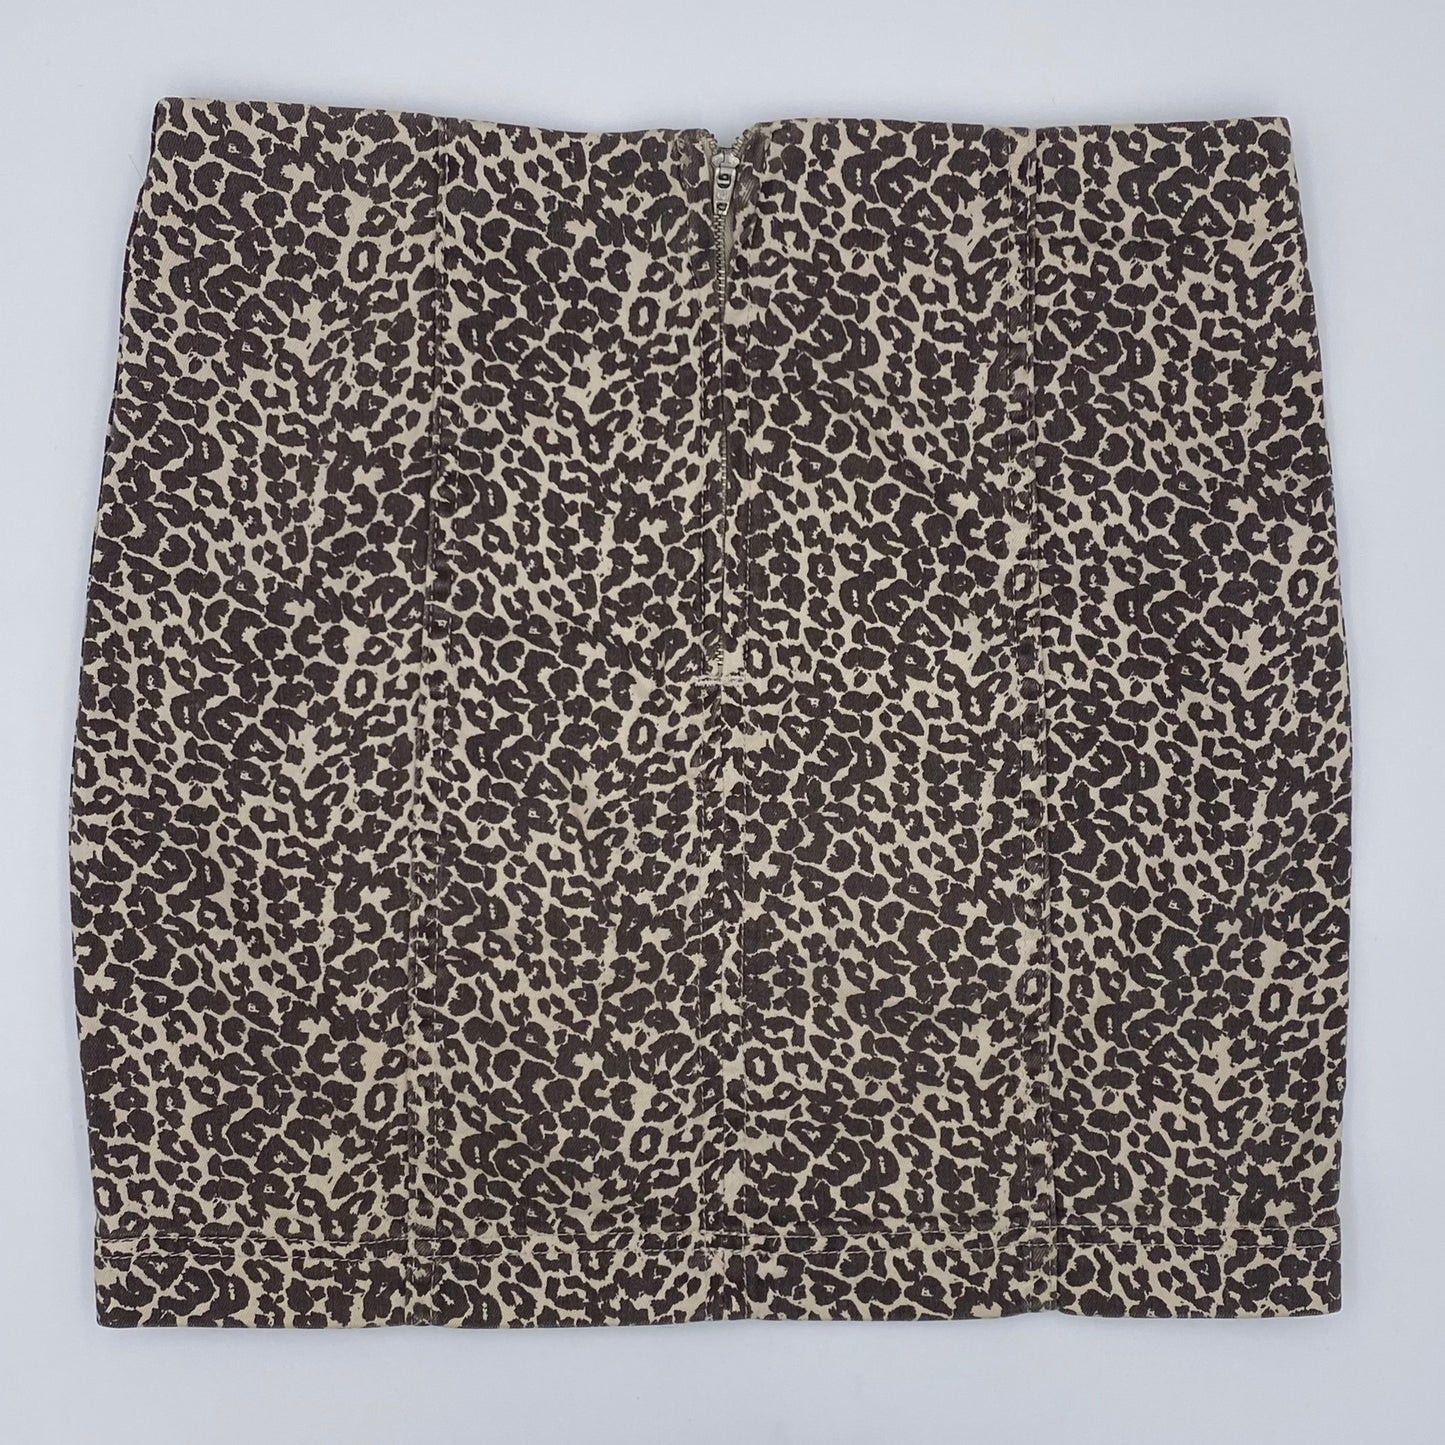 Free People Leopard Mini Skirt